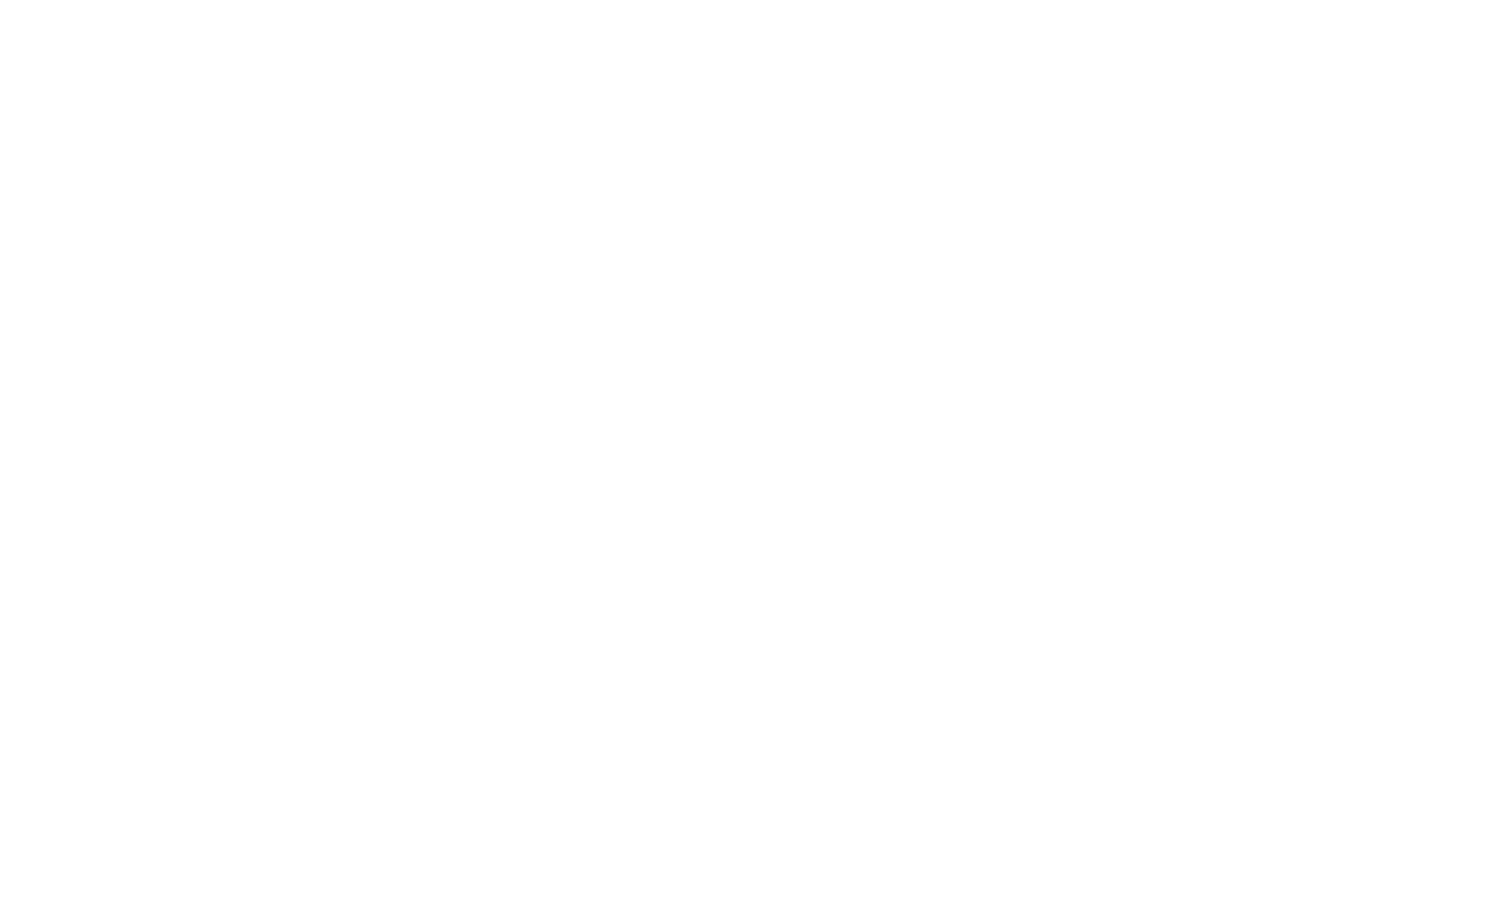 Vickie Paladino for City Council